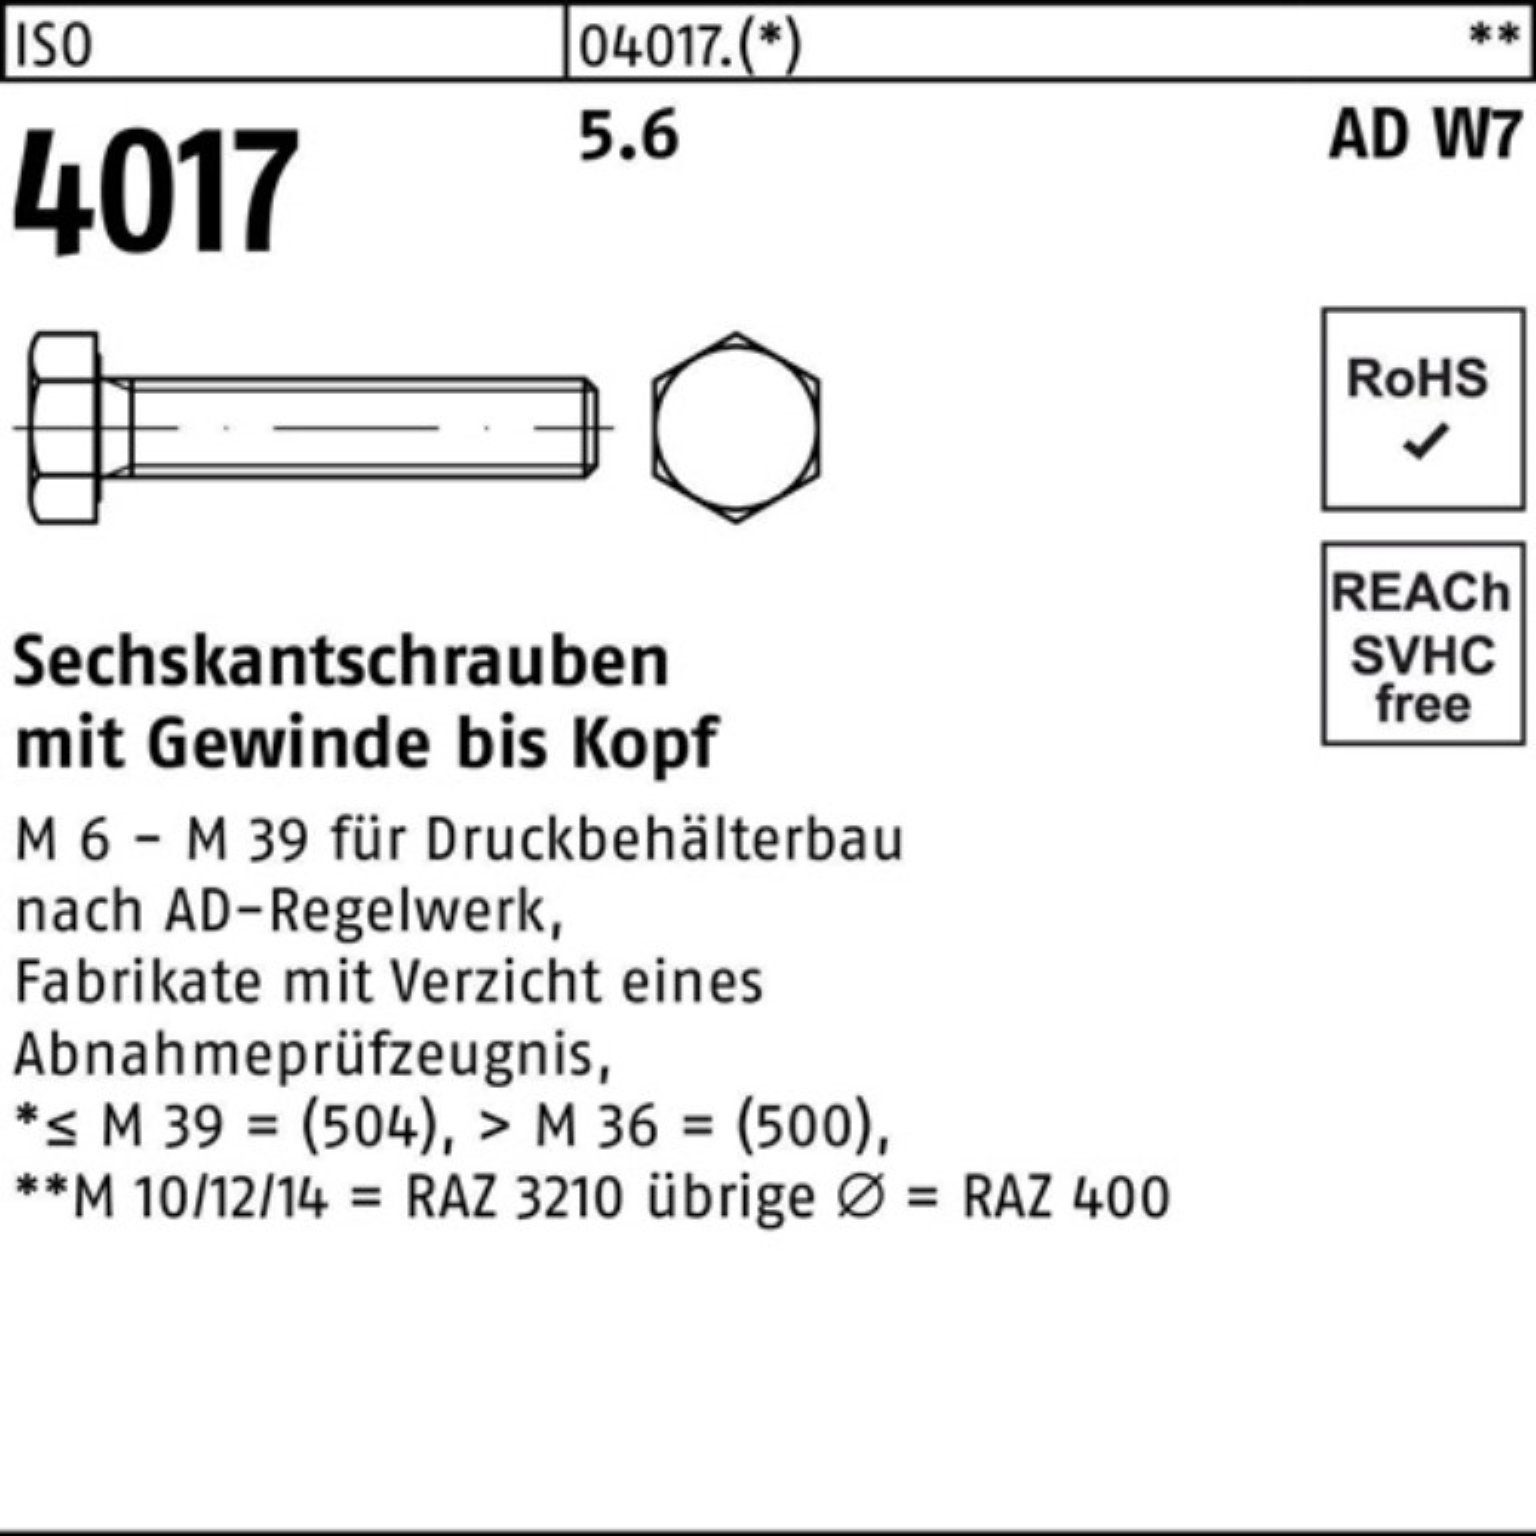 Sechskantschraube Stück 25 M16x 4017 Sechskantschraube Bufab 5.6 110 100er Pack ISO AD W7 VG